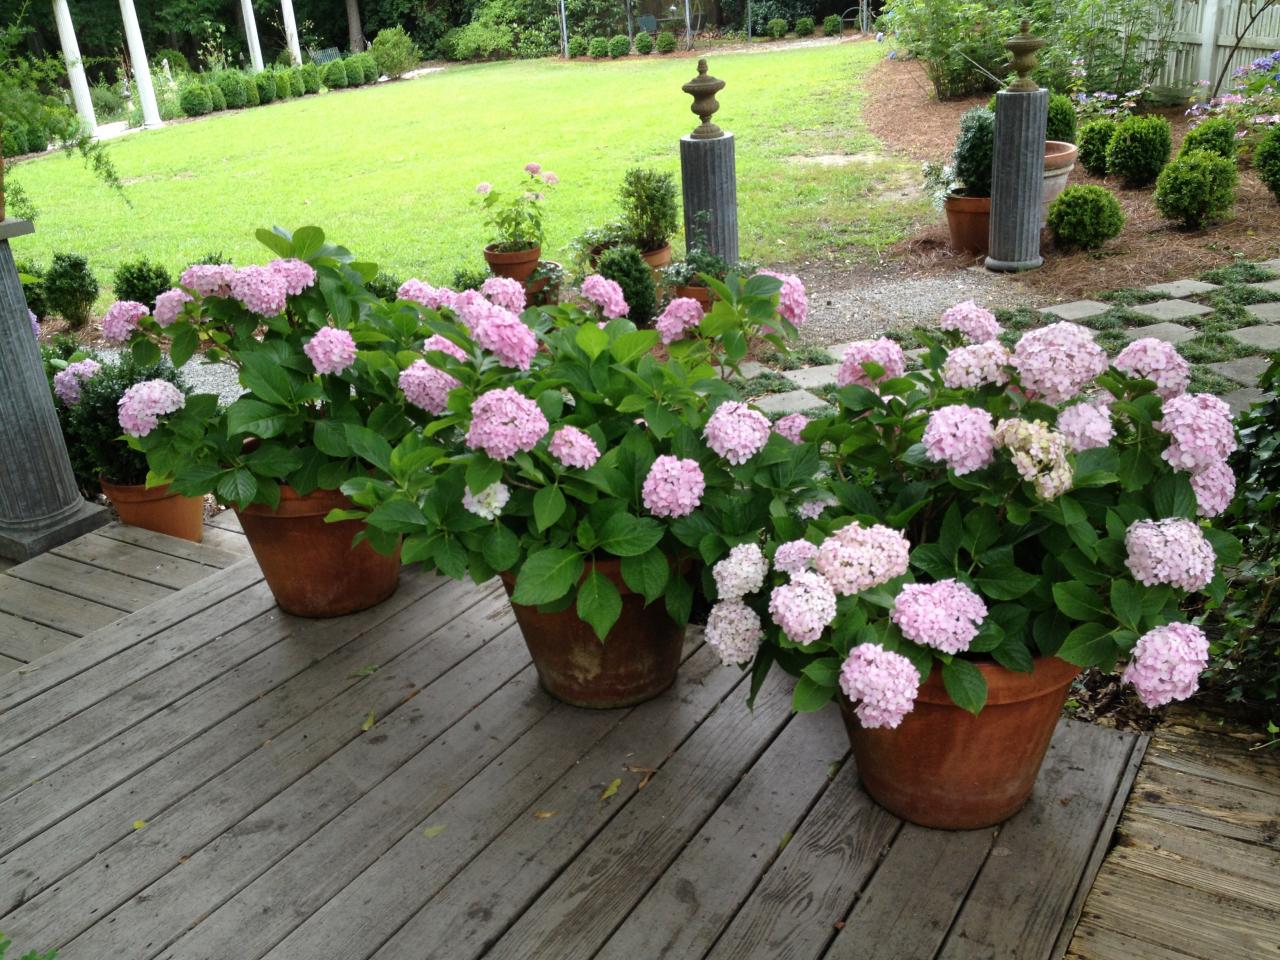 growing hydrangeas in pots - container garden ideas | hgtv